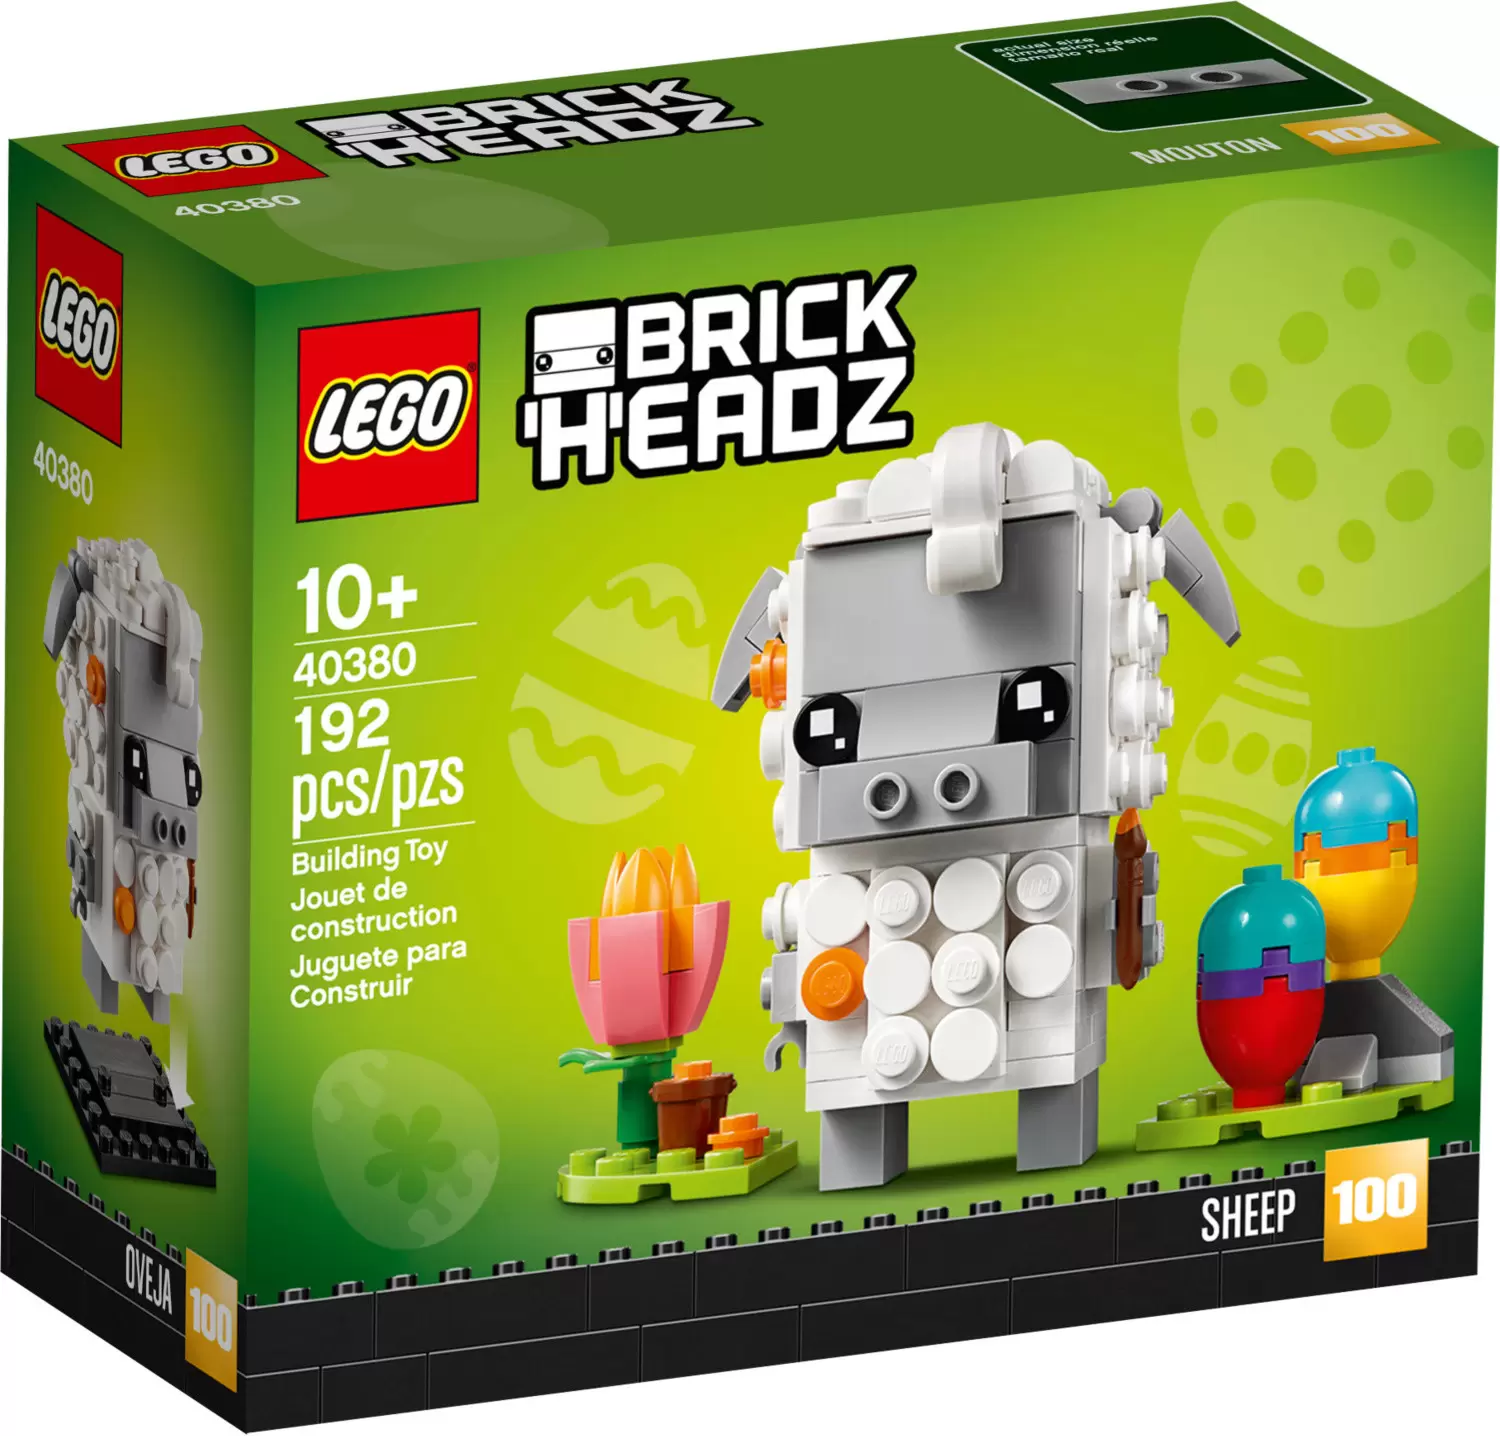 LEGO BrickHeadz - 100 - Easter Sheep